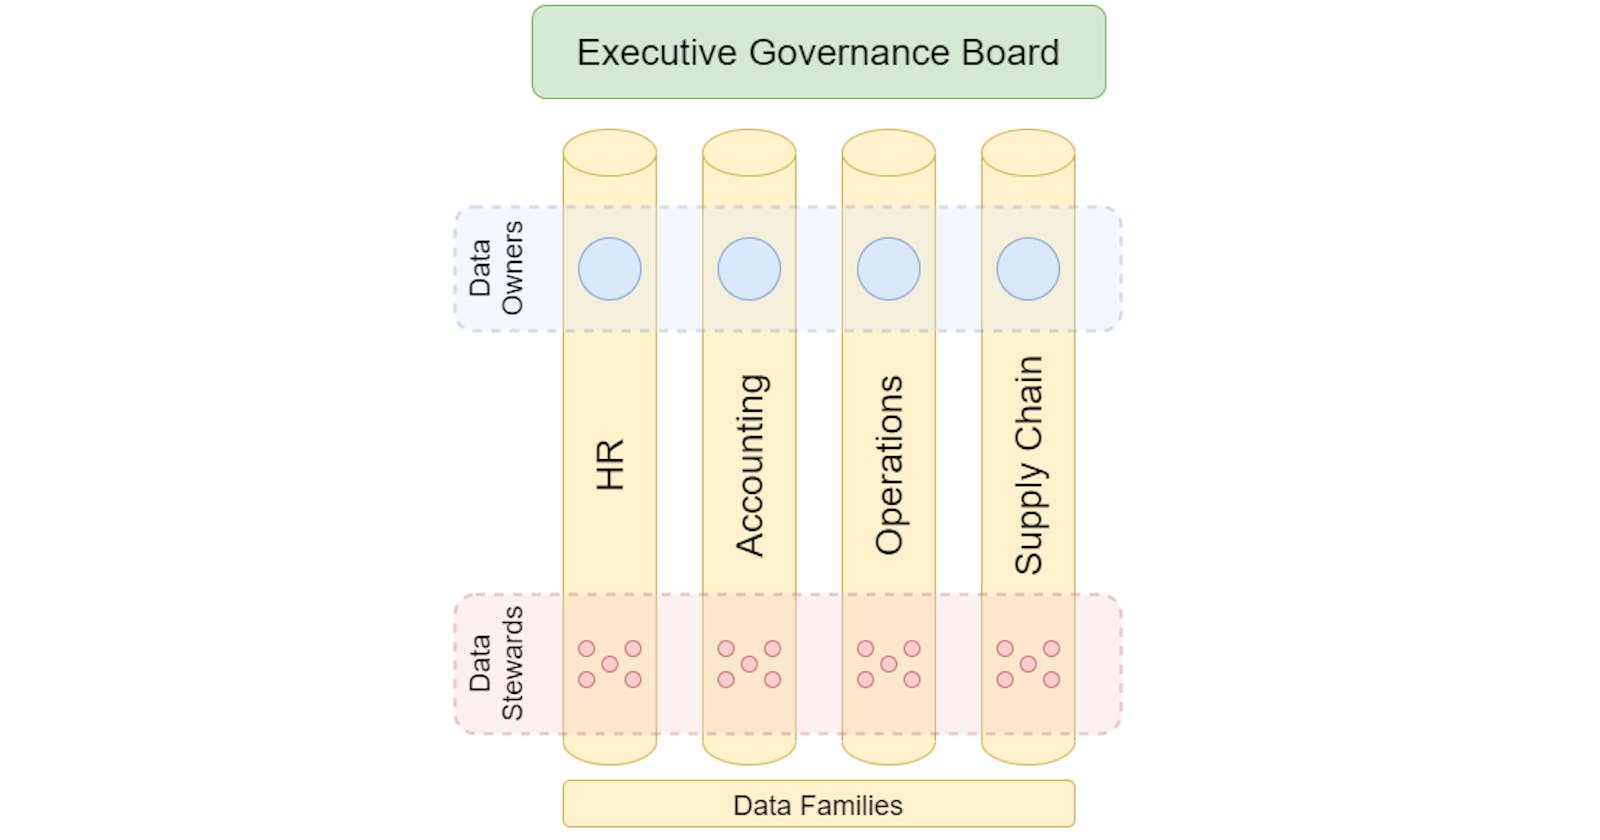 Data Governance Organization